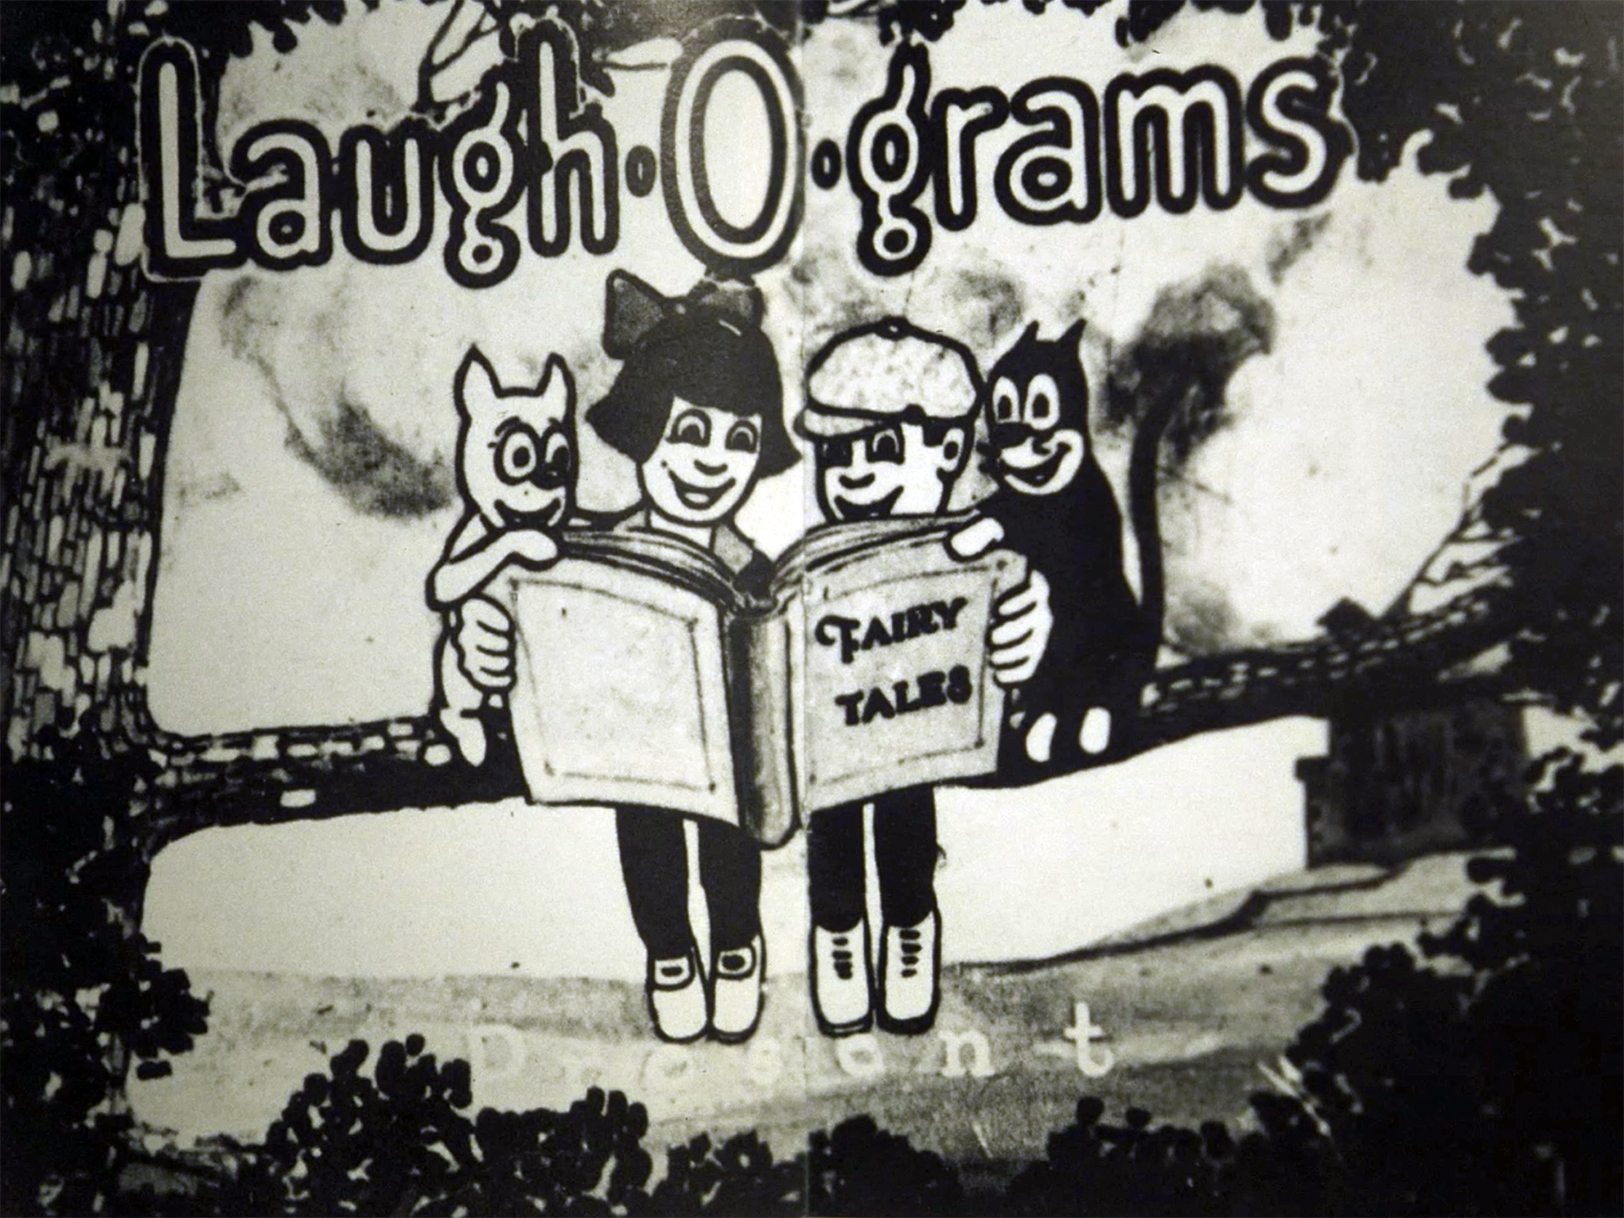 Laugh-O-grams